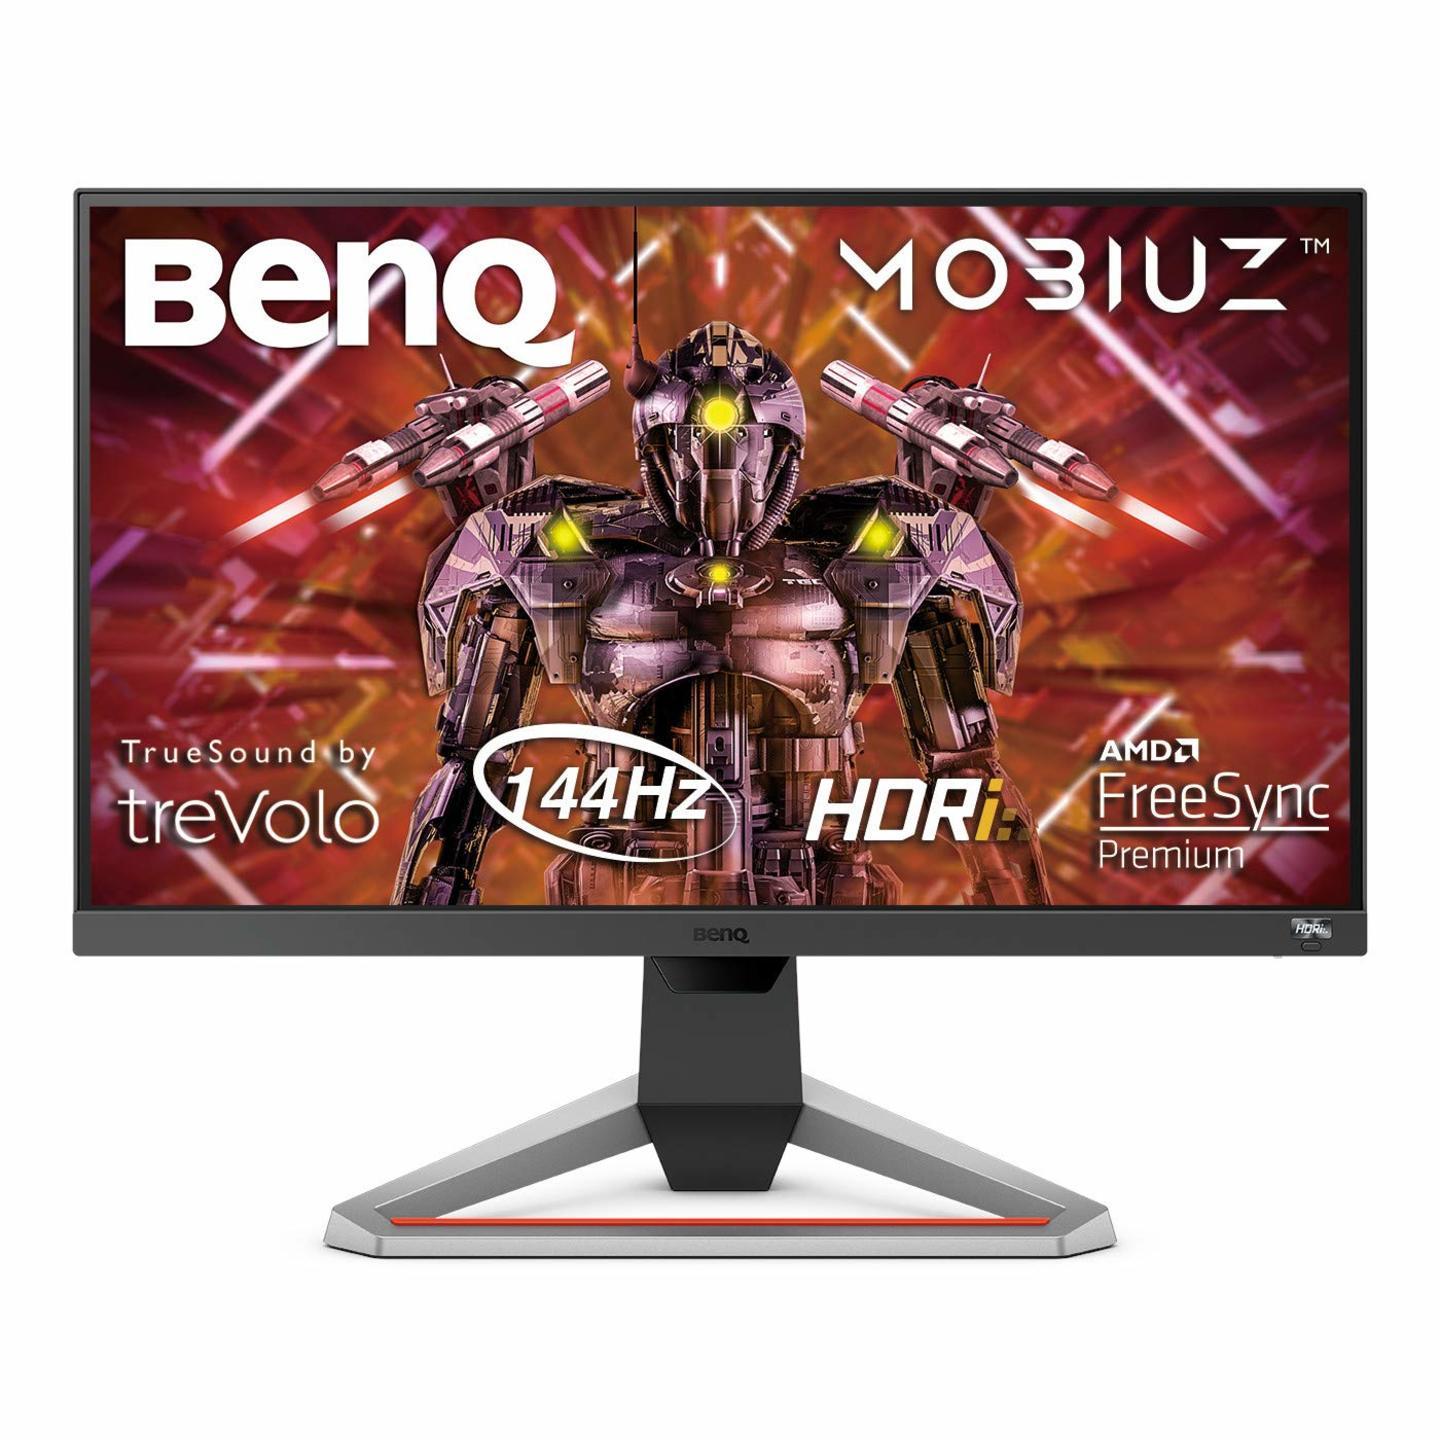 BenQ MOBIUZ EX2510 62.23 cm (24.5 inch) Full HD Gaming Monitor, 144 Hz 1 ms, HDR10, 99% sRGB, IPS, 1080p, Freesync, Built-in Speakers, HDMI (Black)